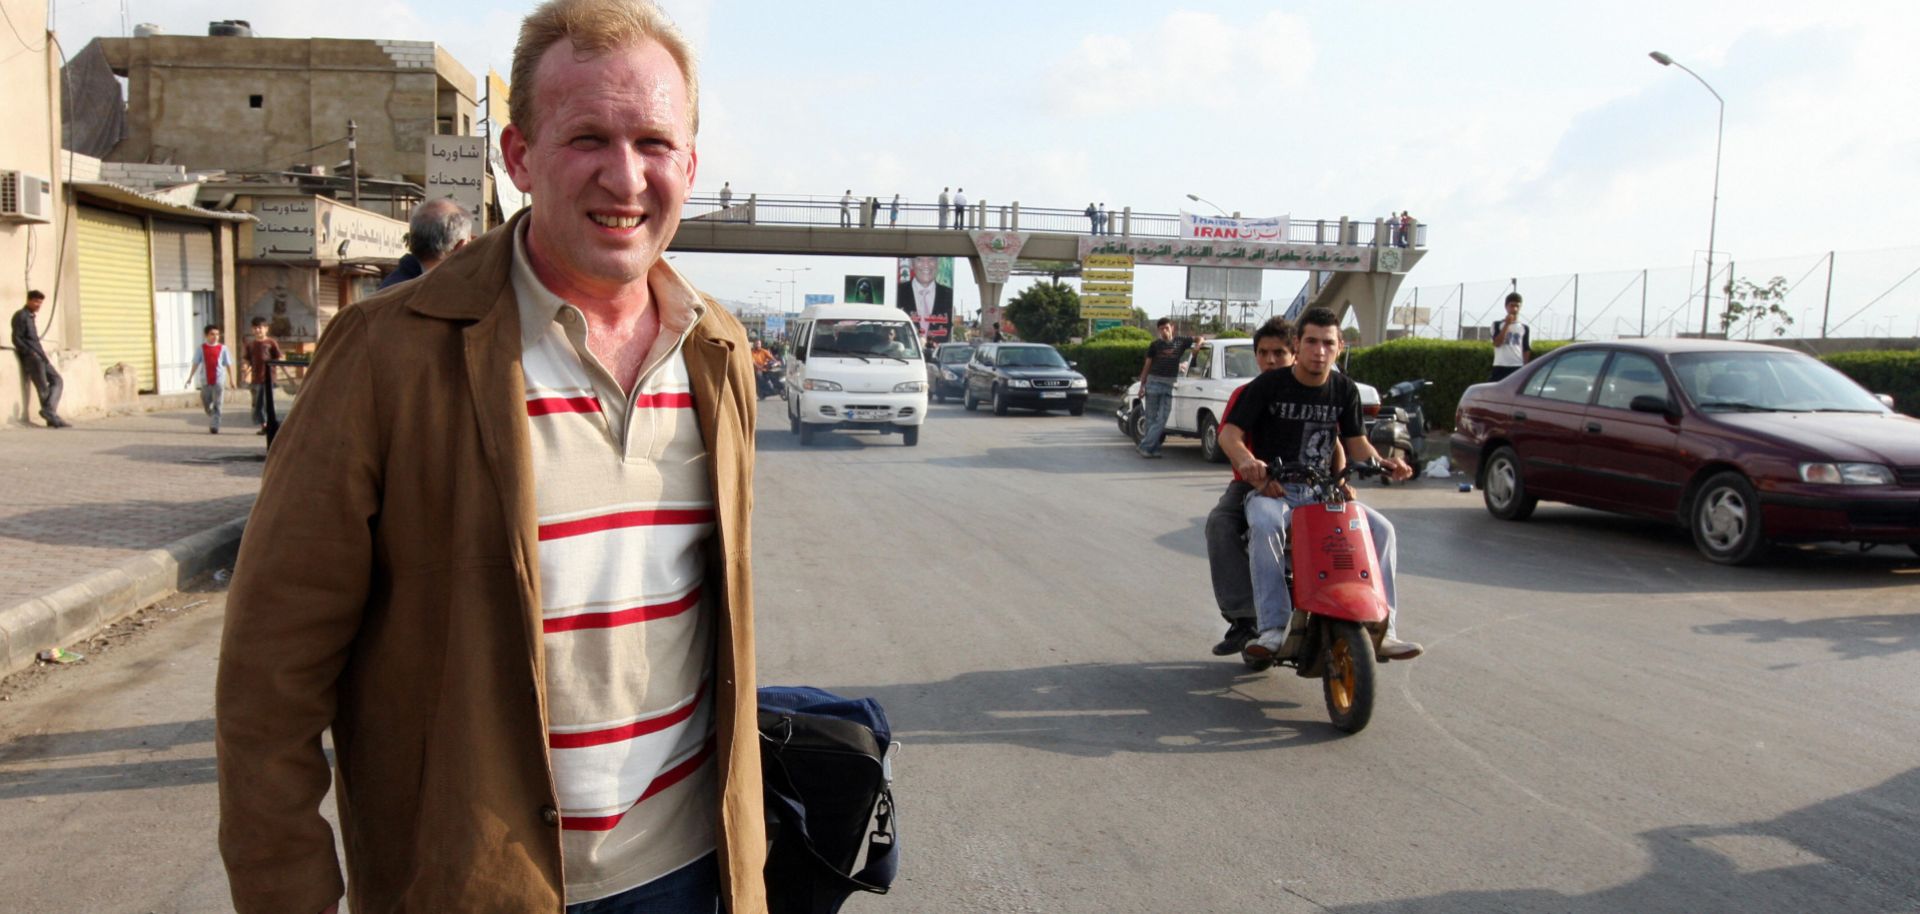 A tourist is a little too obvious as he walks away from Rafik Hariri International Airport in Beirut.